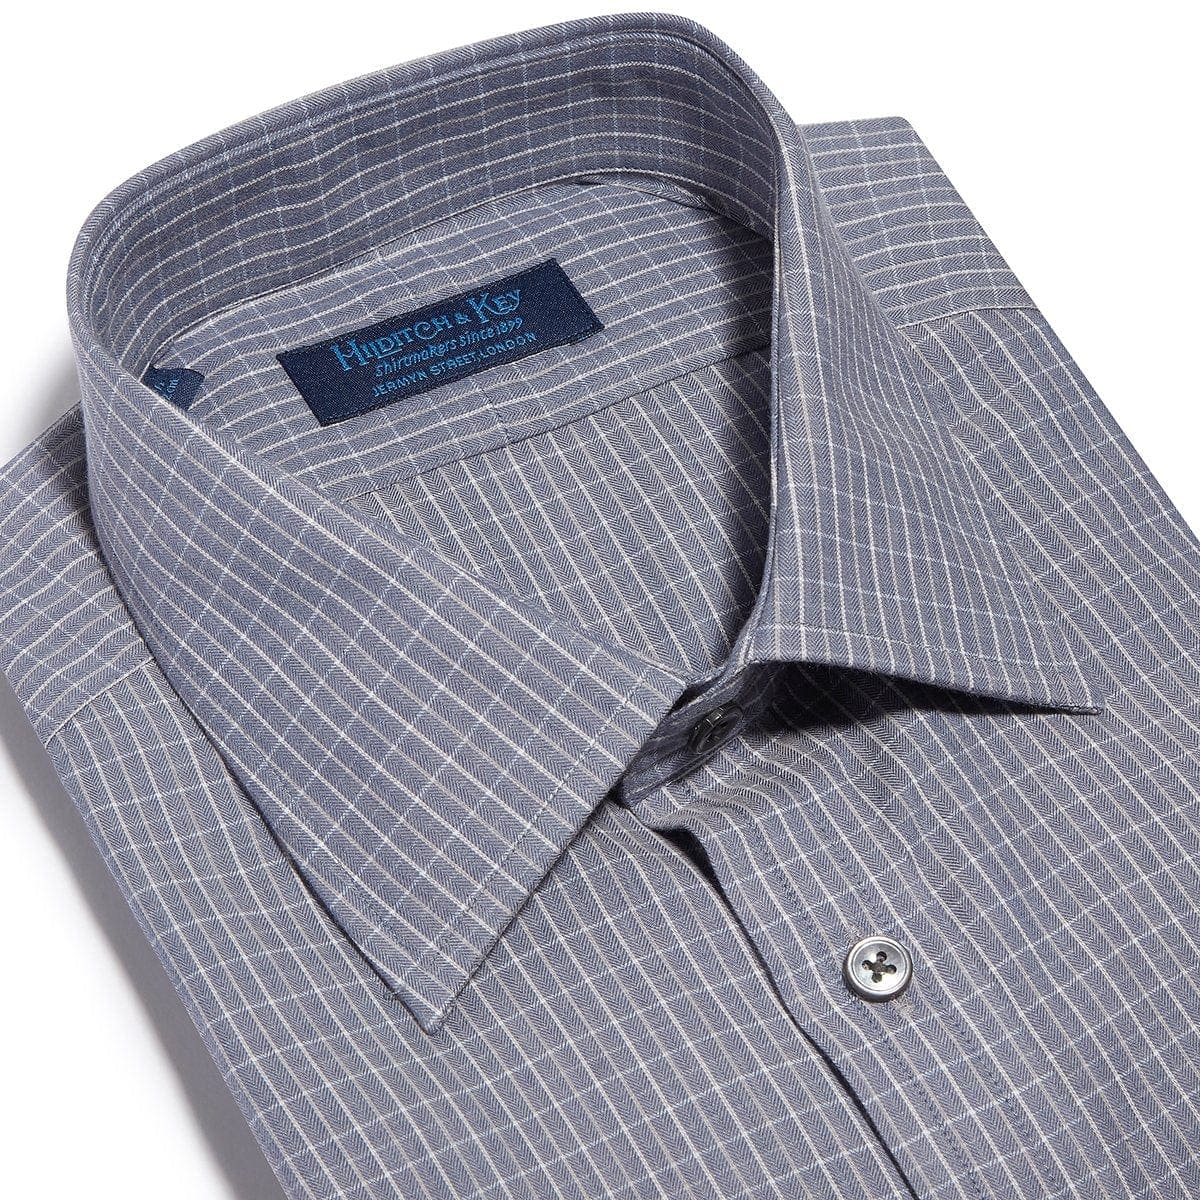 Contemporary Fit, Classic Collar, 2 Button Cuff Shirt in a Grey & White Check Herringbone Cotton